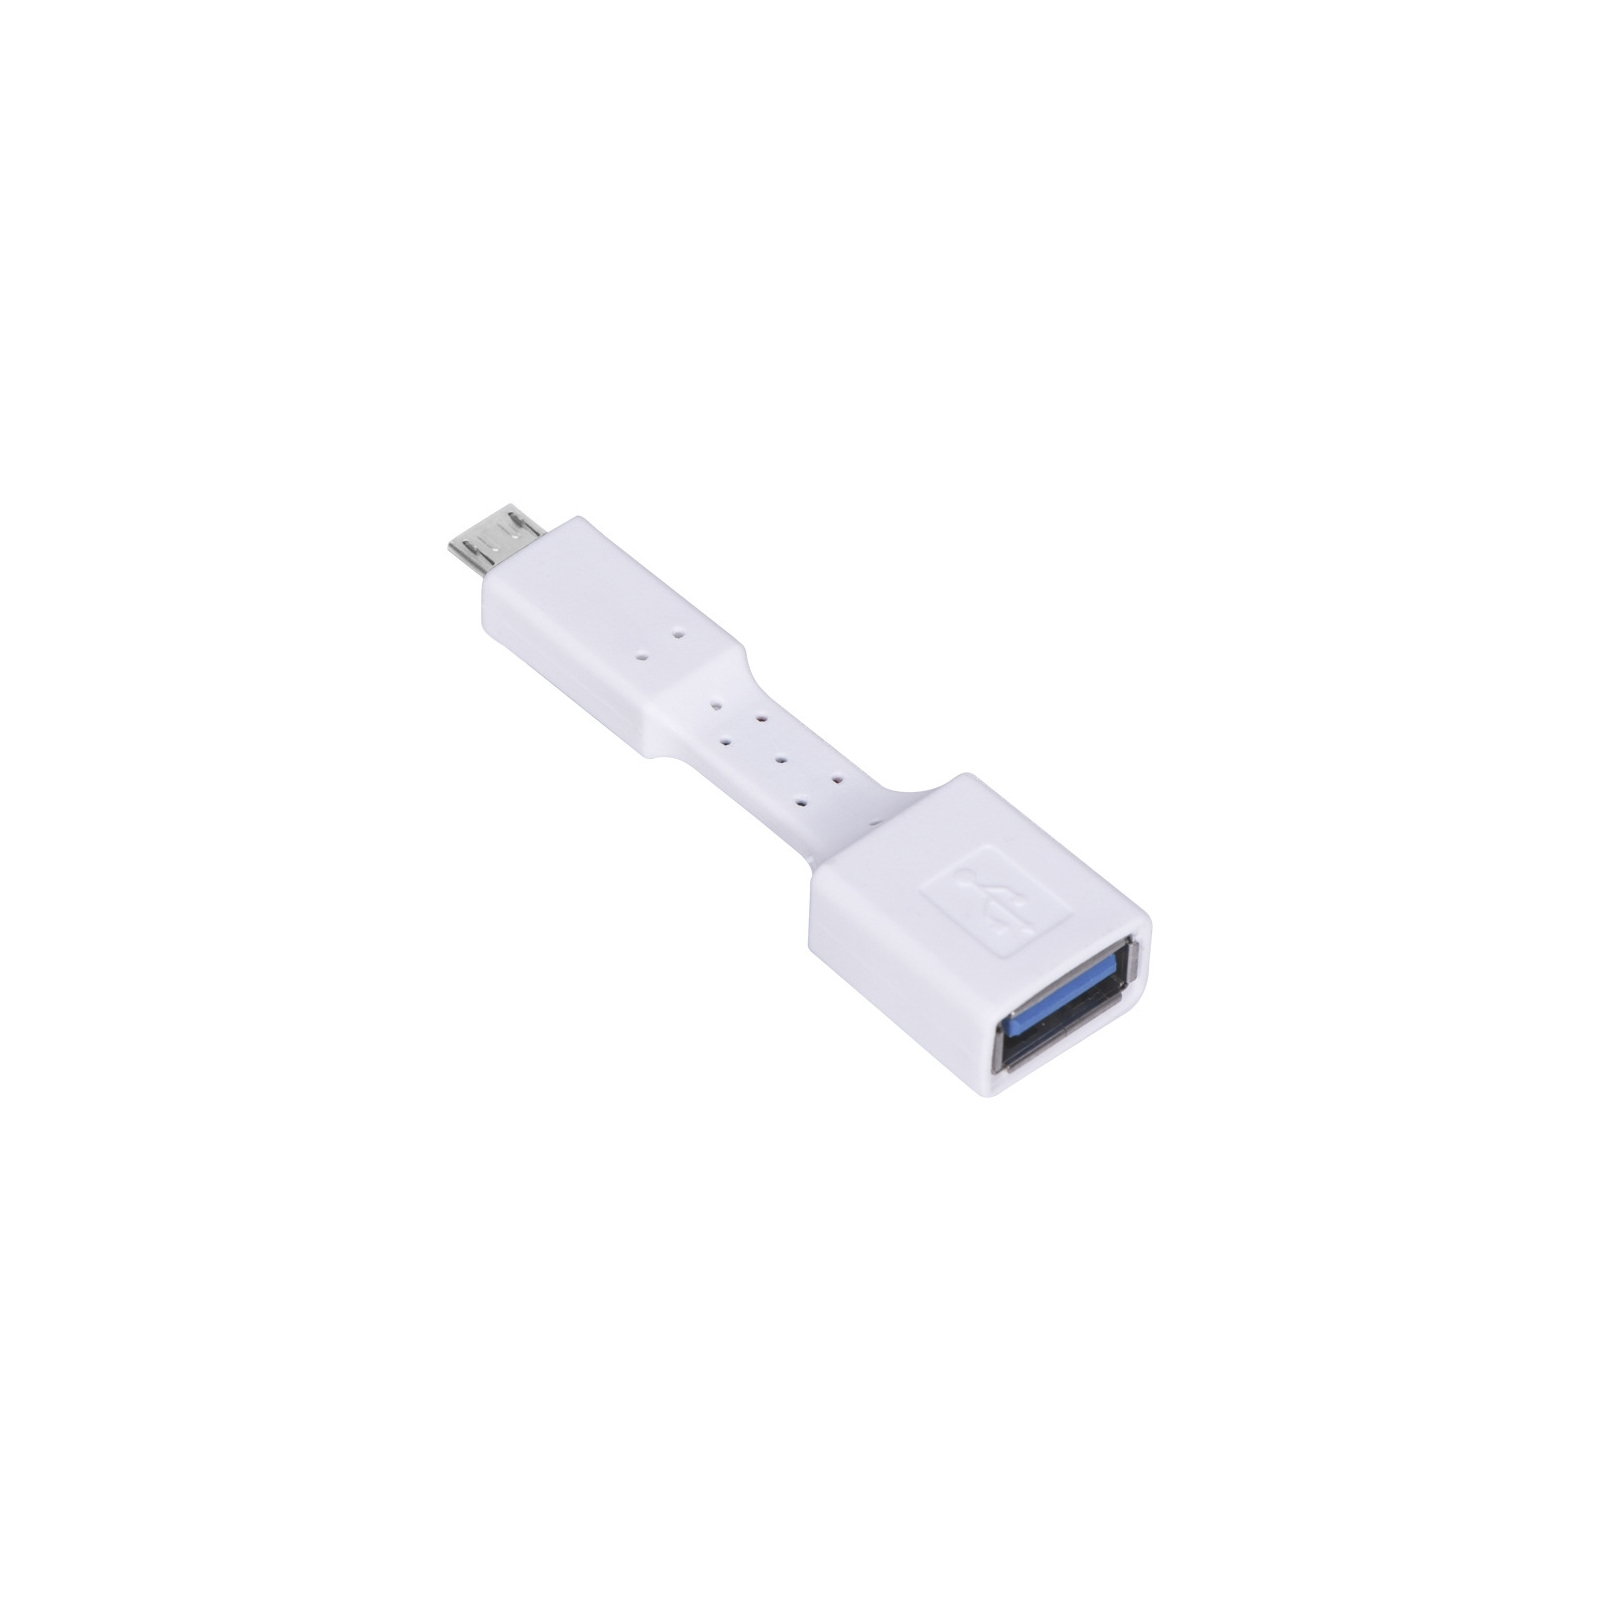 Переходник USB to Micro USB XoKo (XK-AC110-WH)